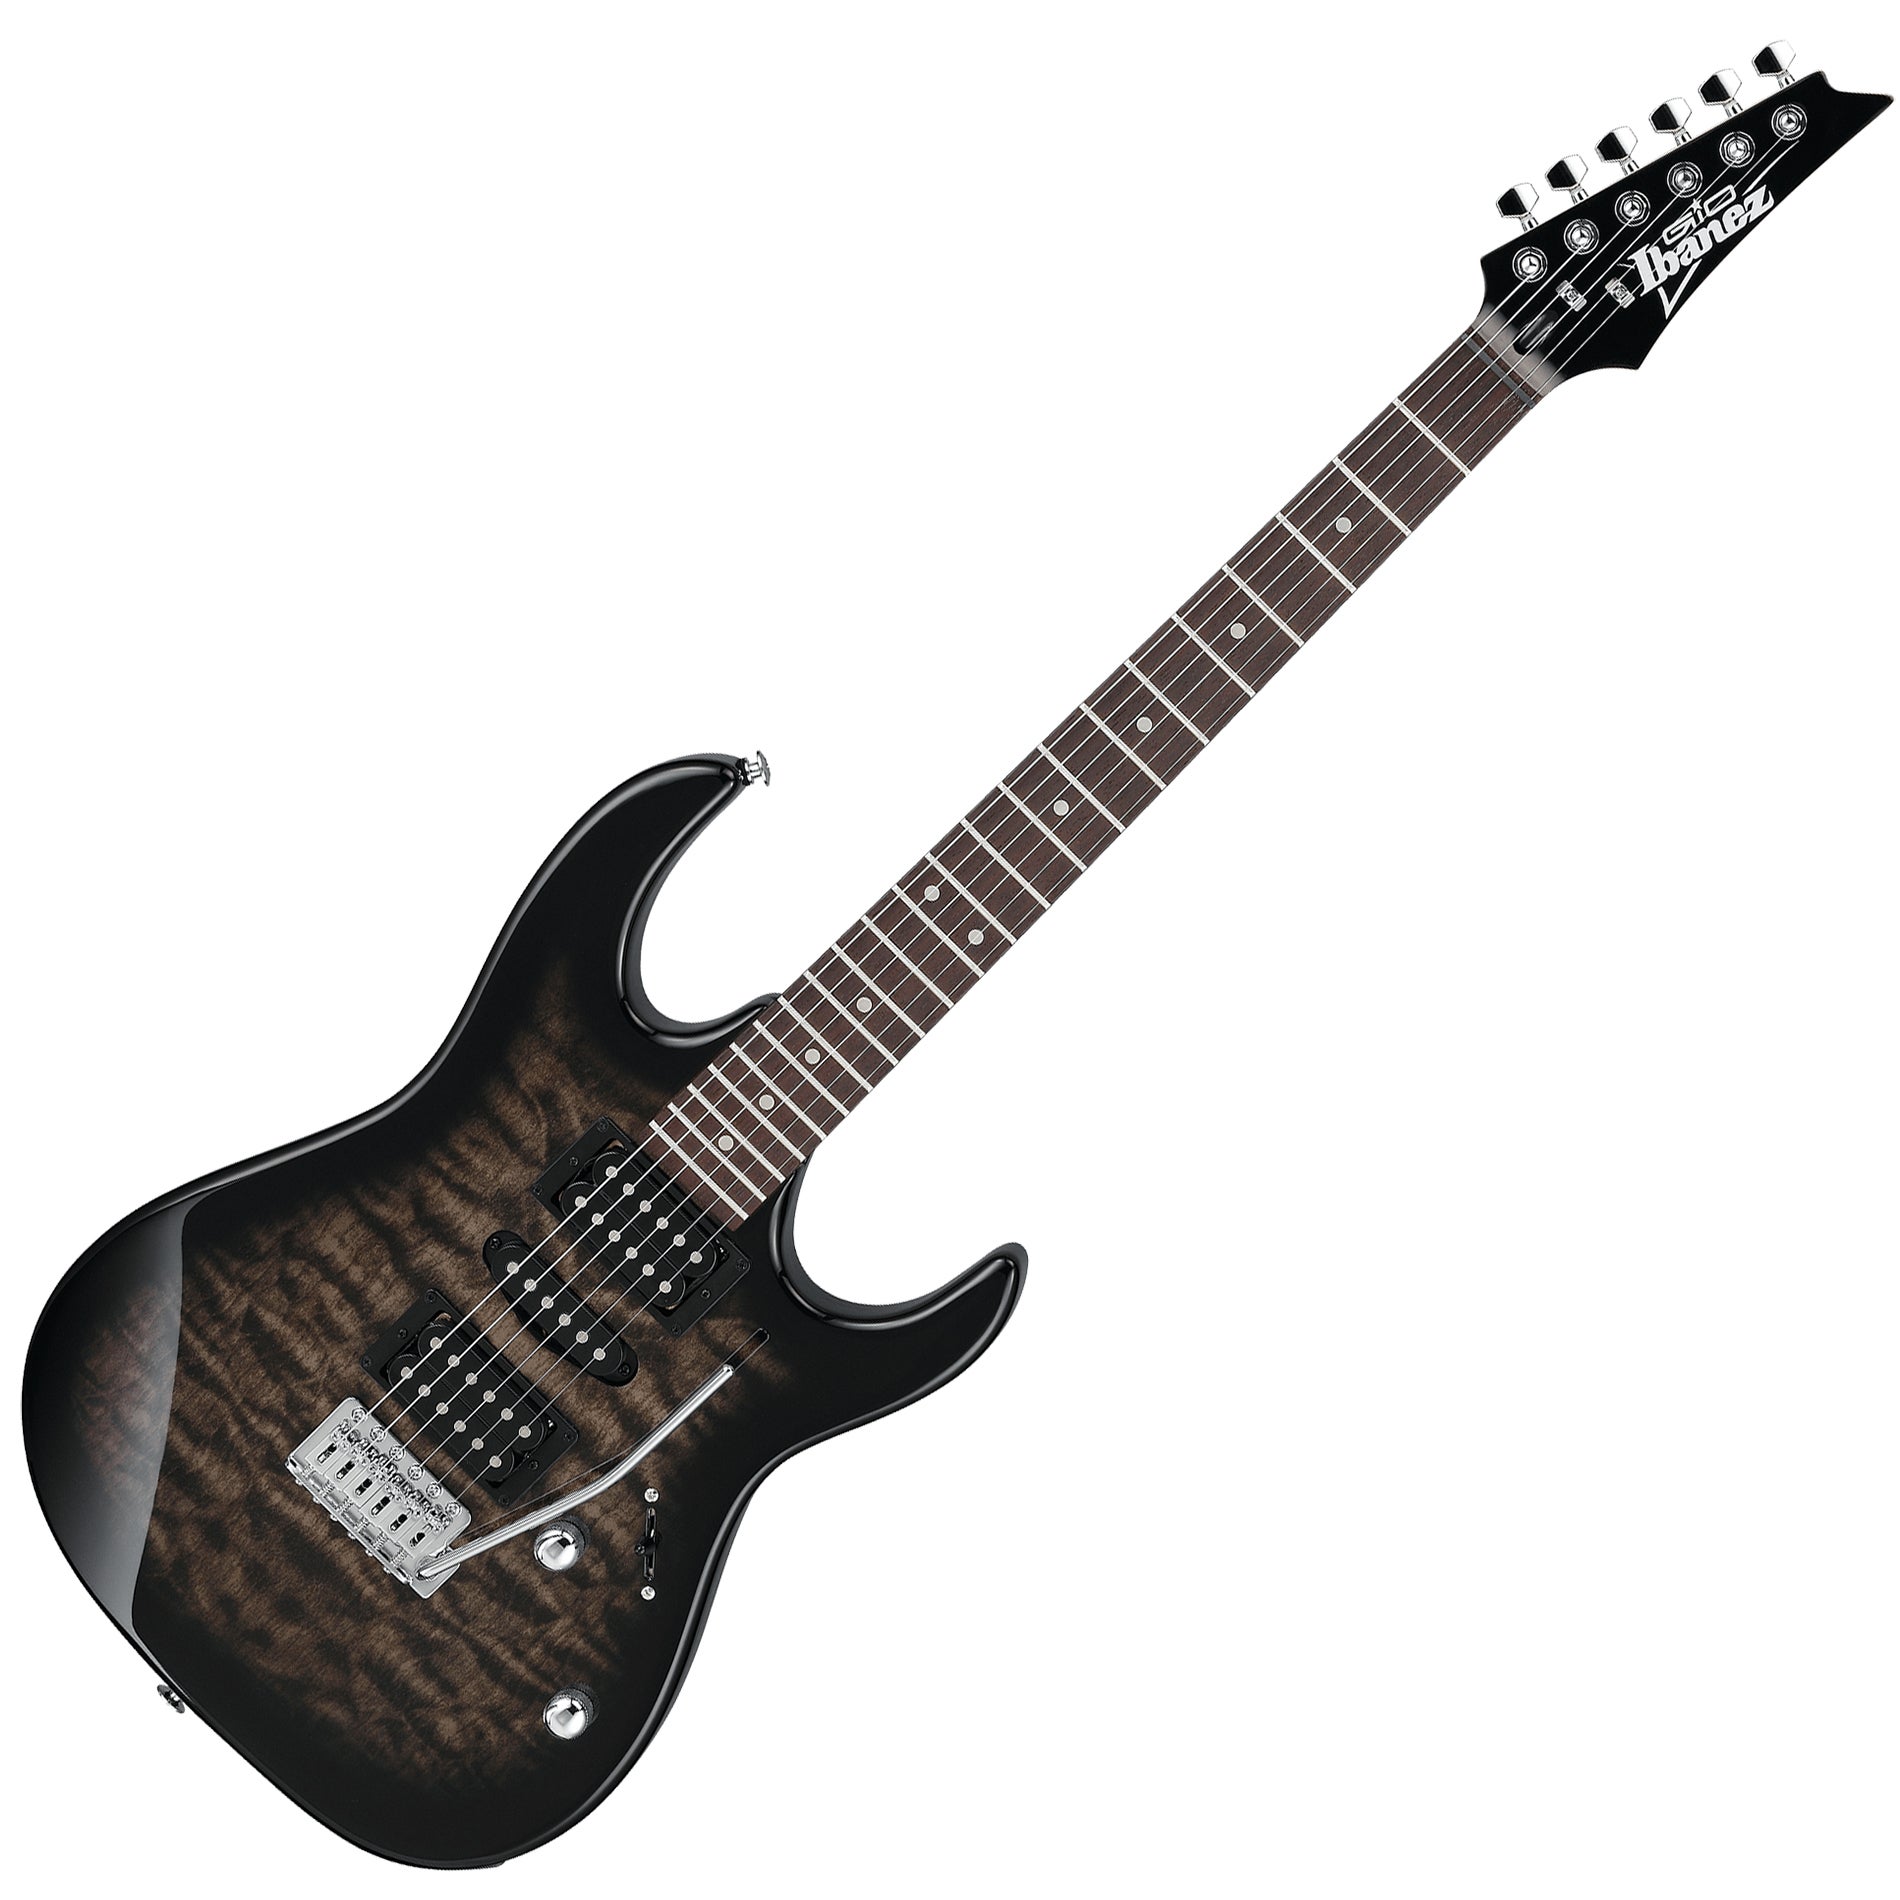 Ibanez Gio Grx70qa Solidbody Electric Guitar - Transparent Black 